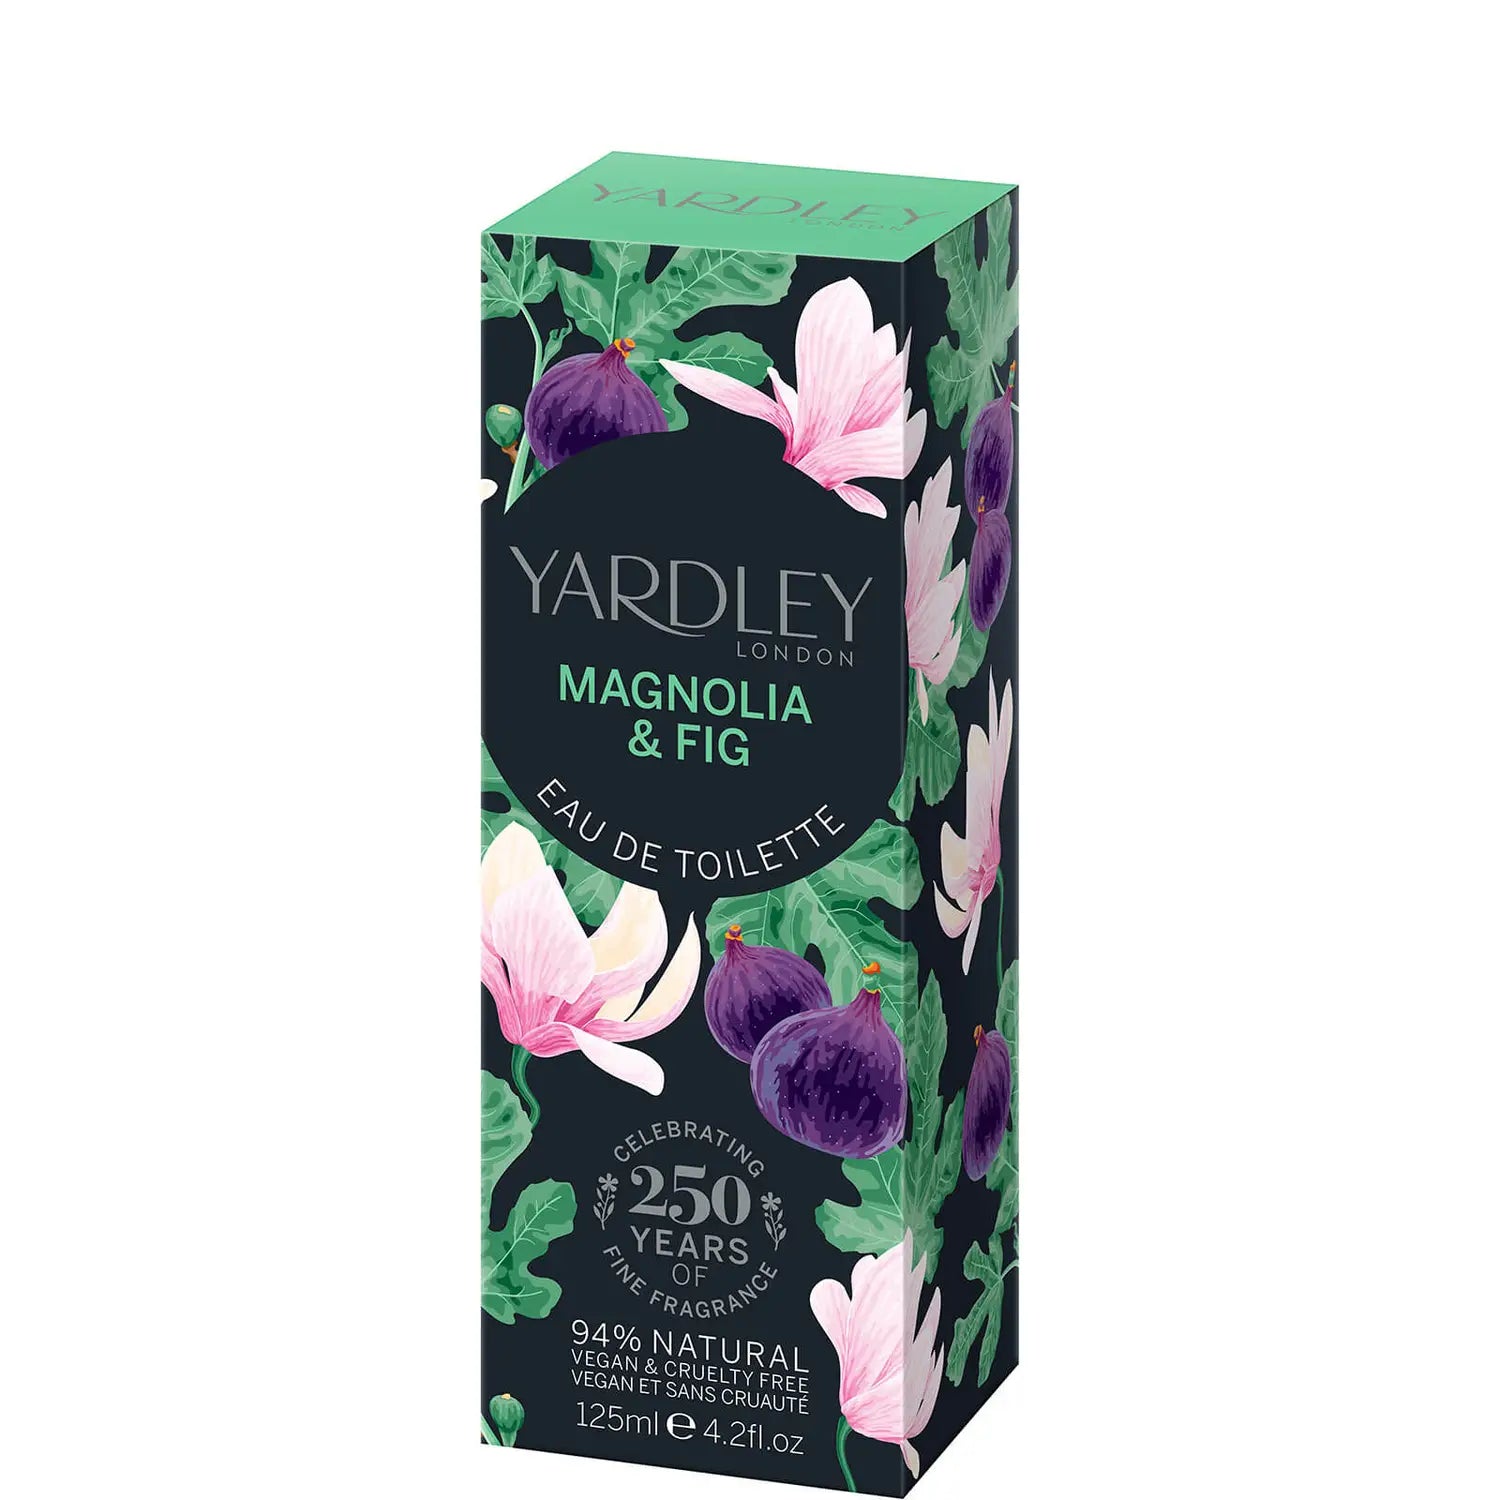 Yardley Magnolia & Fig Eau de Toilette 125ml